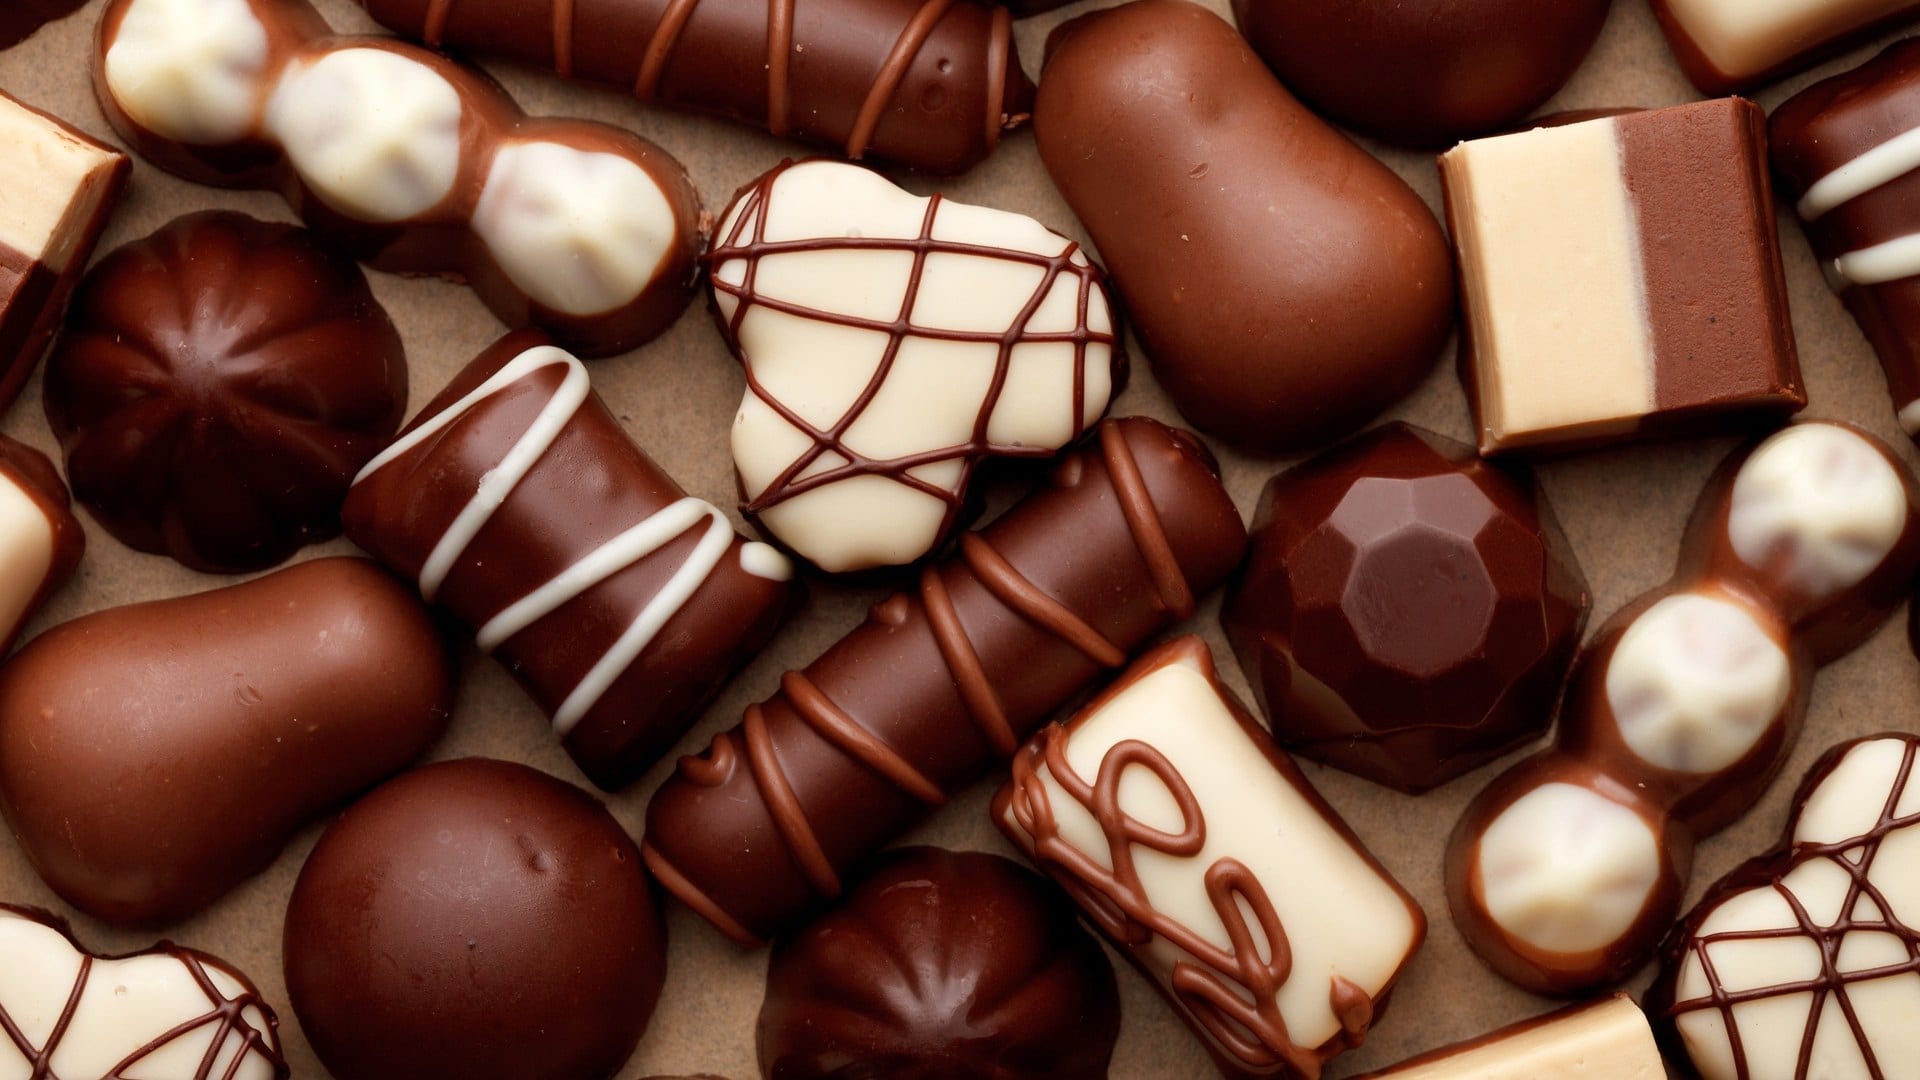 Shih Tzu Foods That Are Dangerous - Chocolate